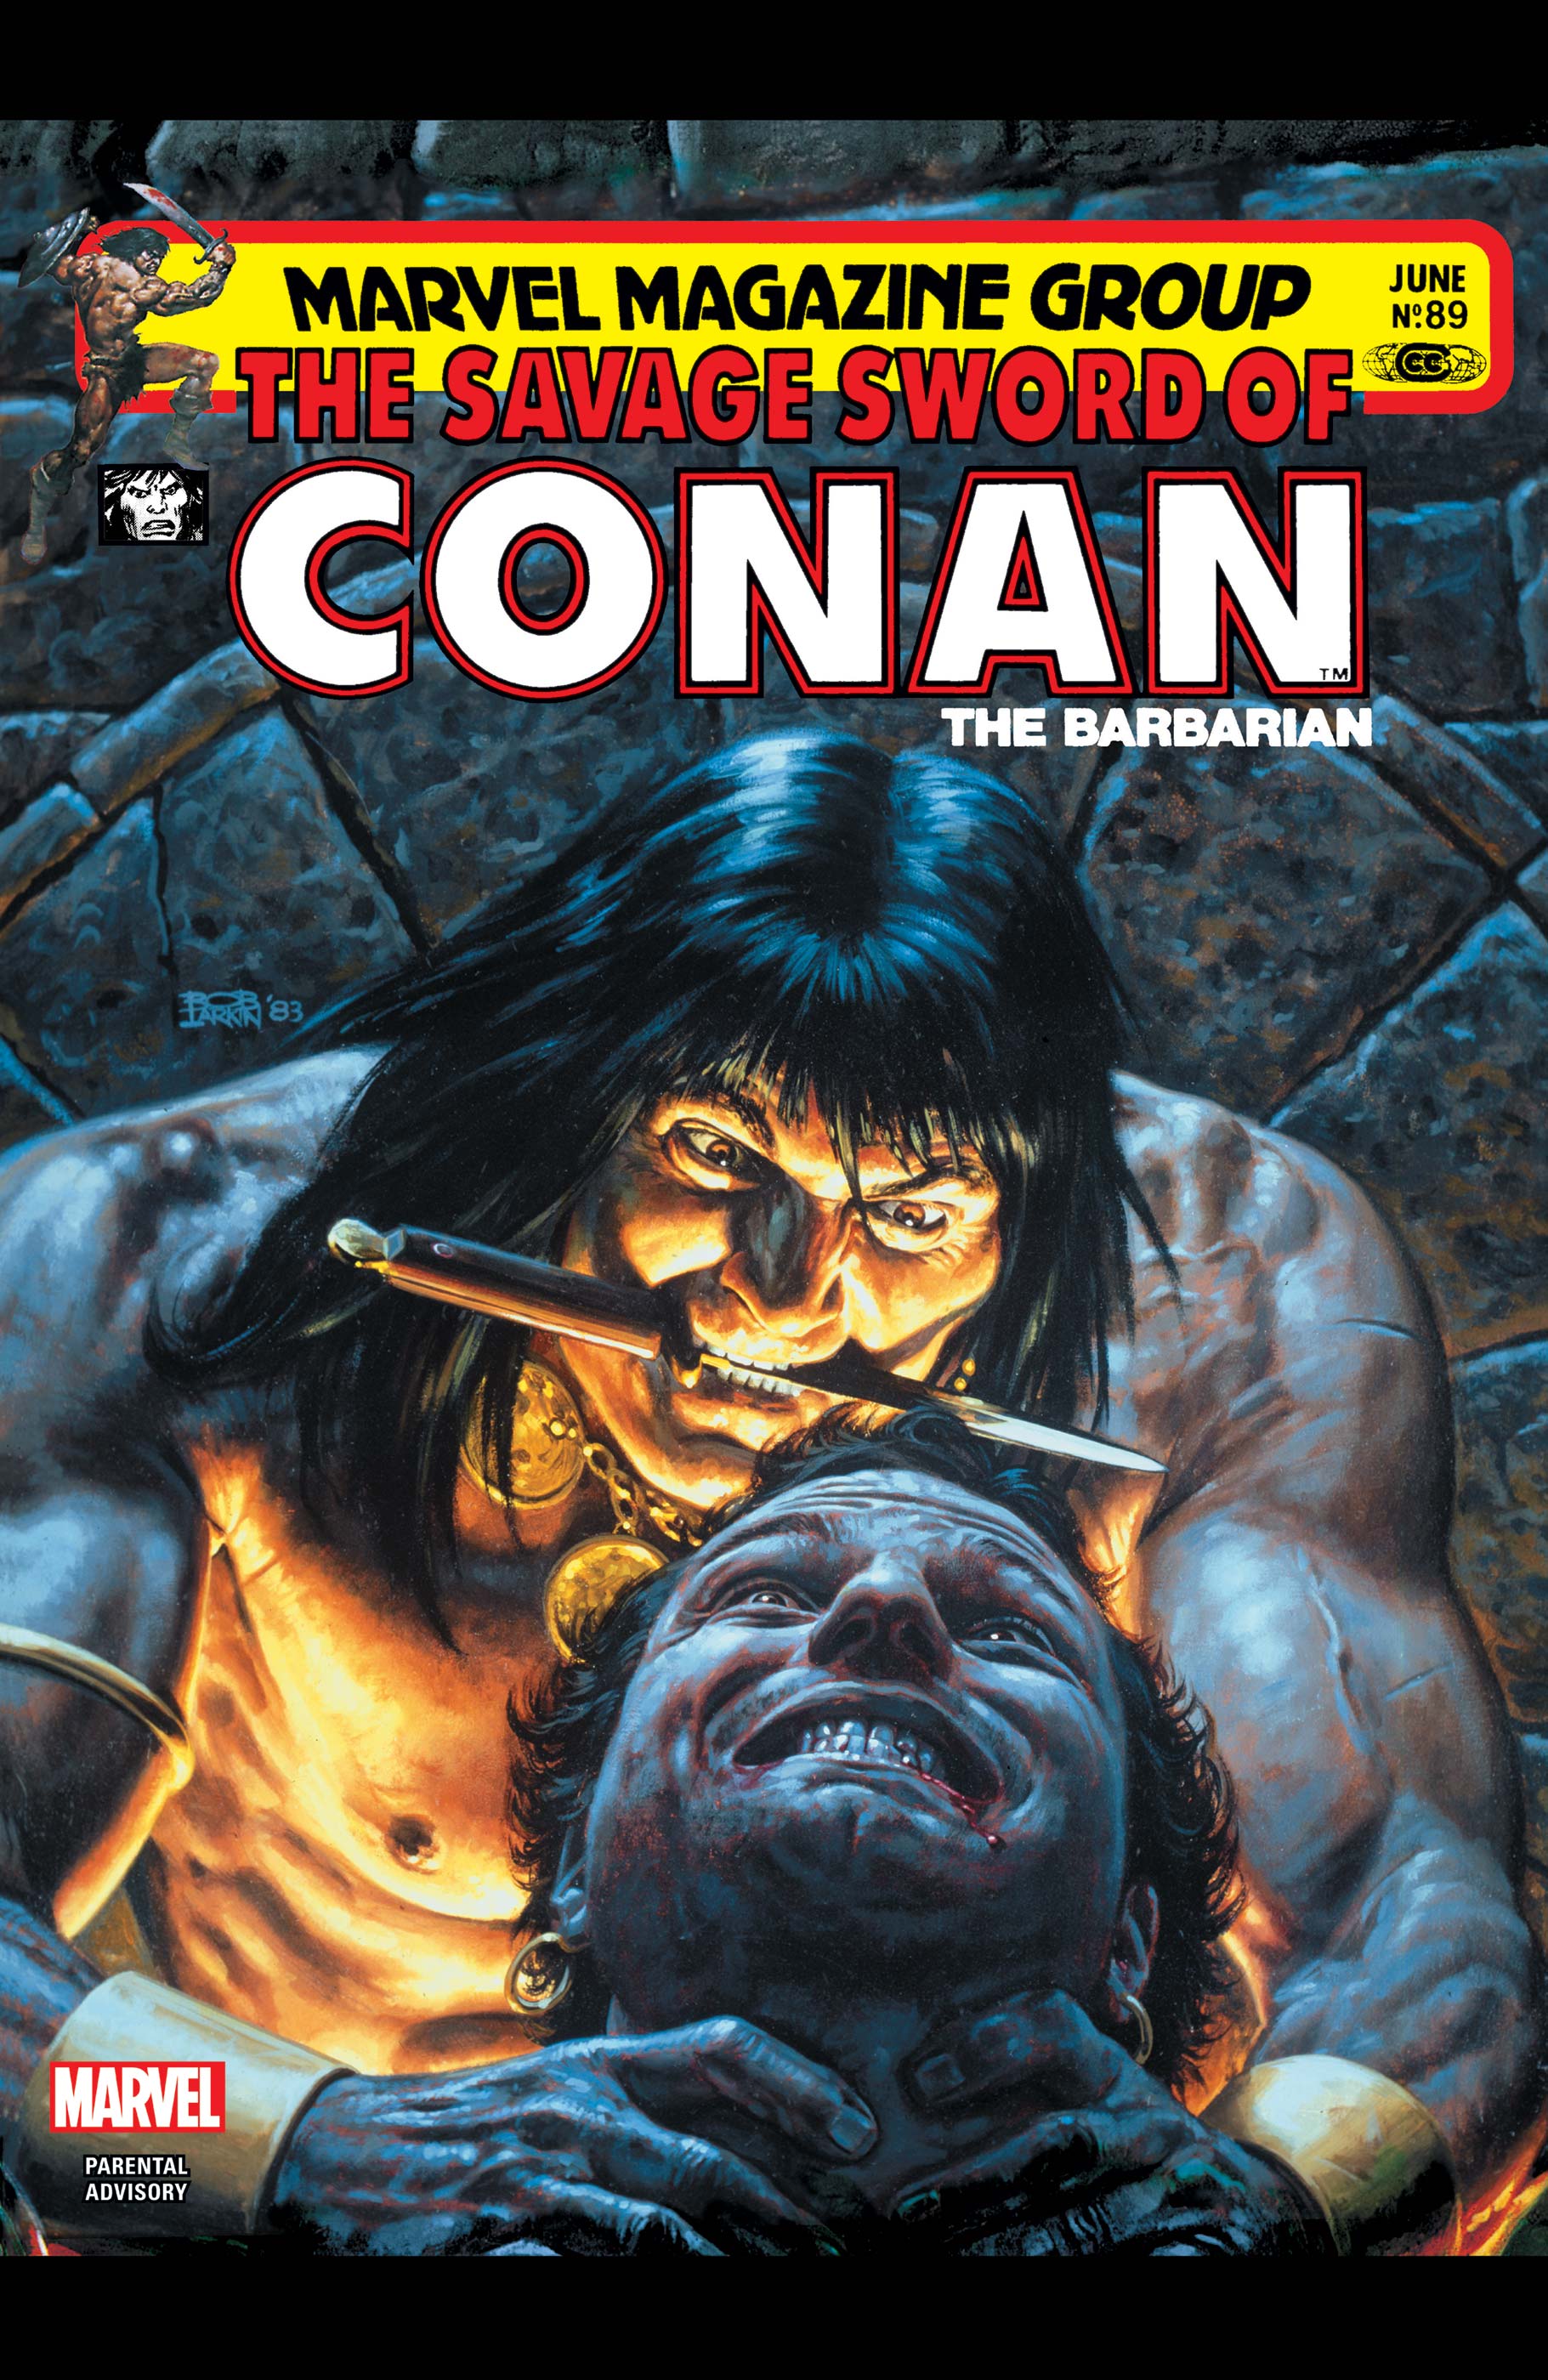 The Savage Sword of Conan (1974) #89